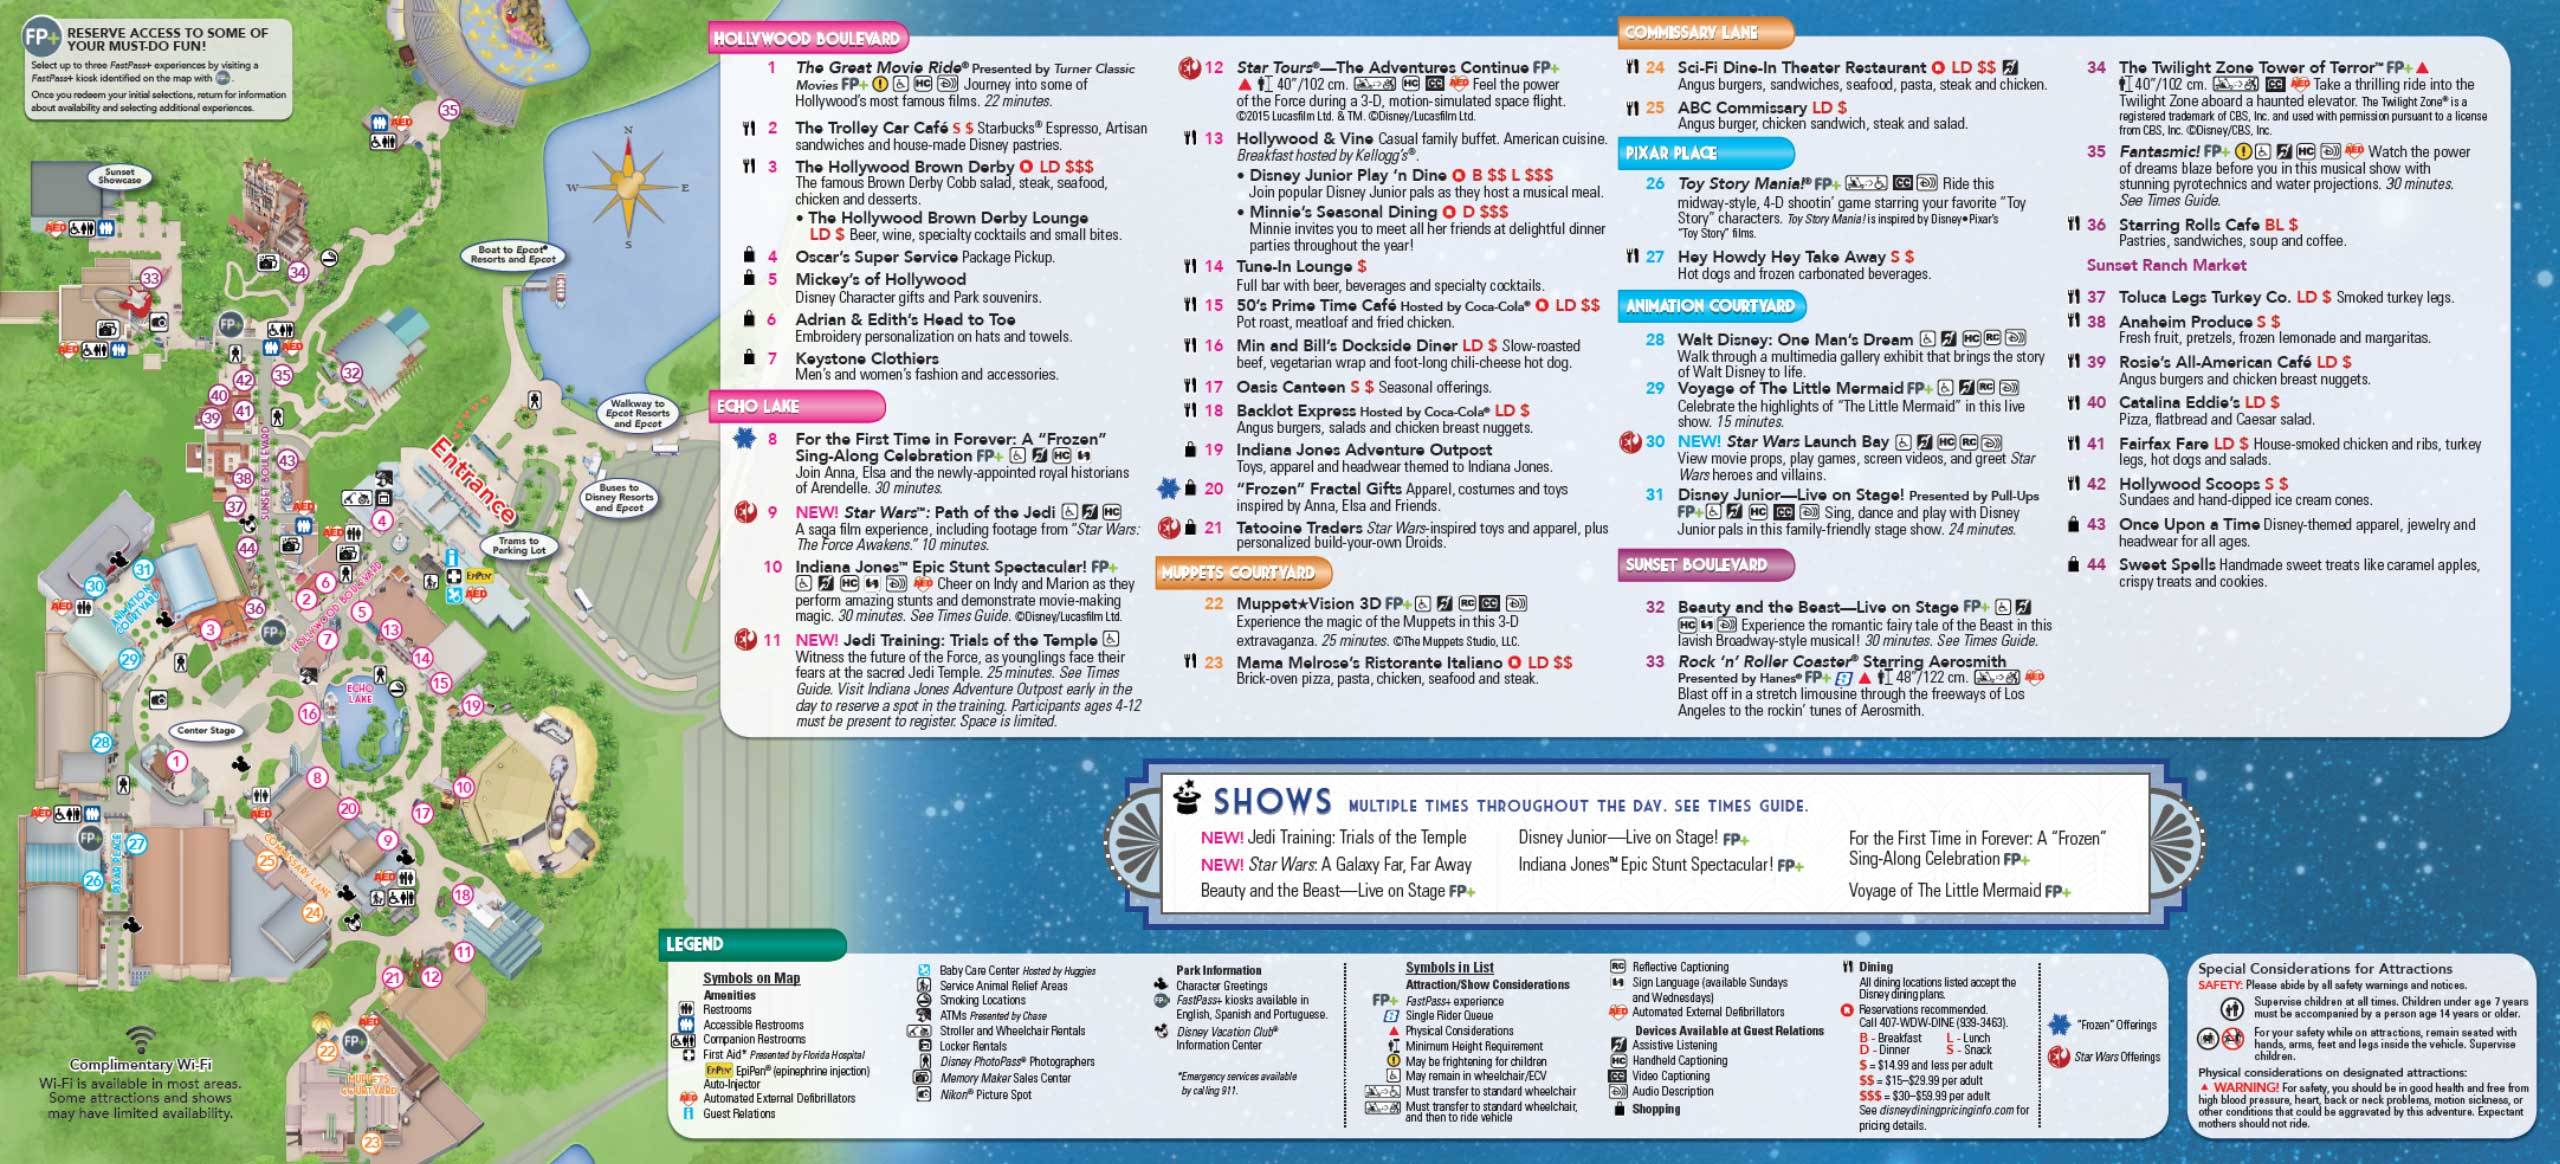 Disney's Hollywood Studios Guide Map May 2016 - Back